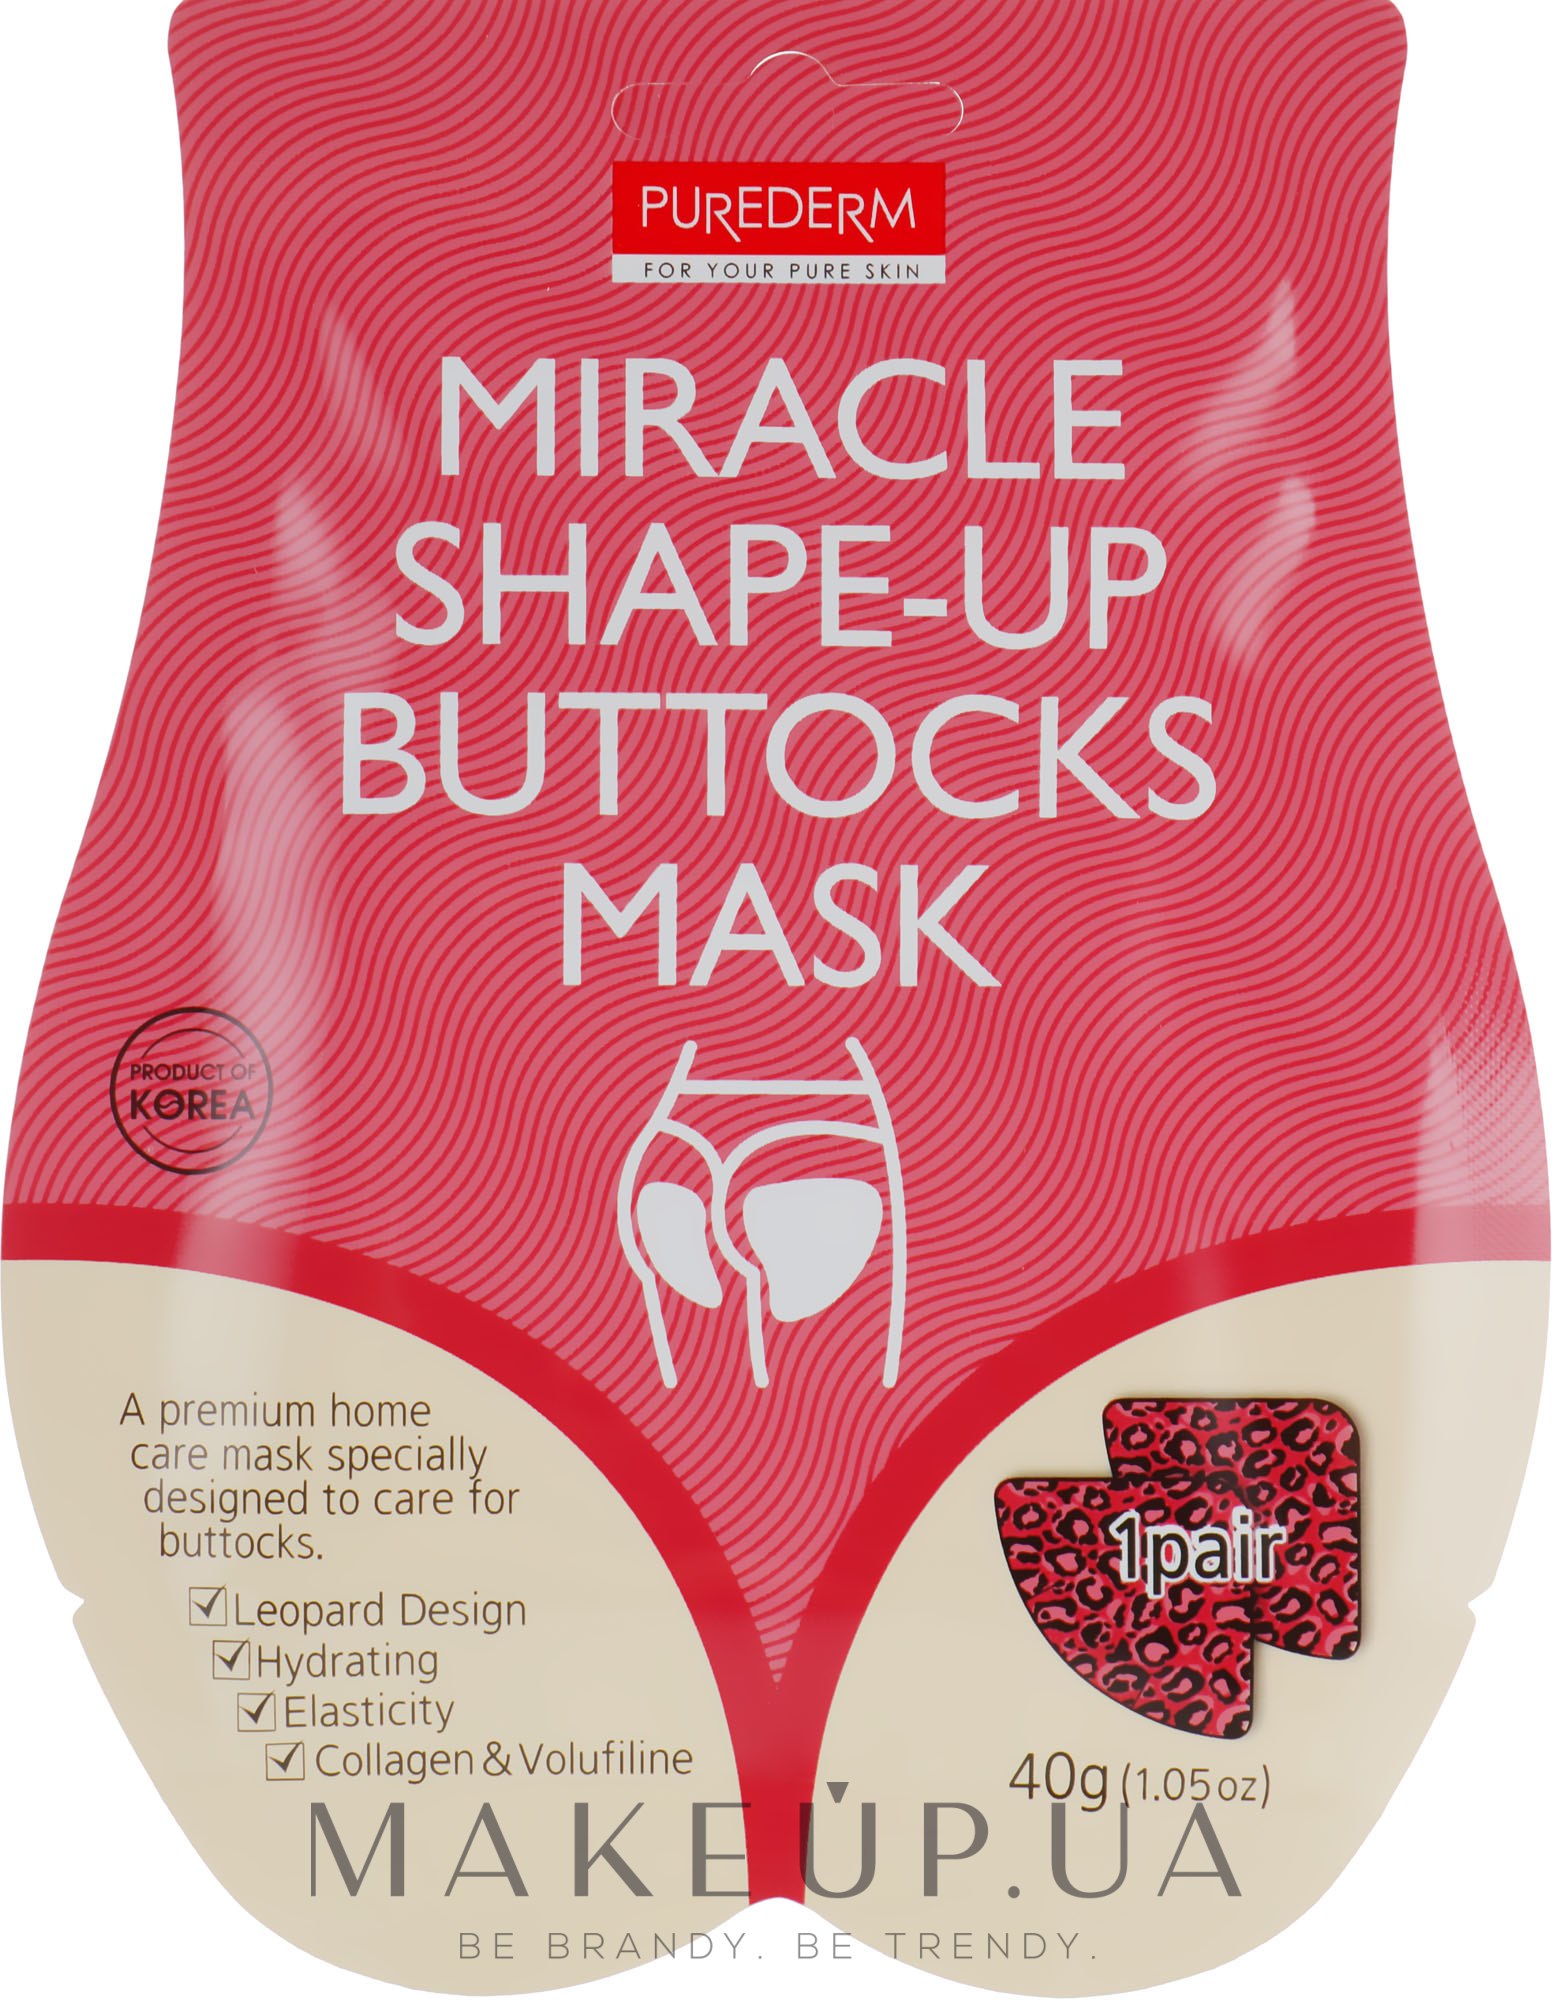 Маска-лифтинг для интенсивной подтяжки ягодиц - Purederm Miracle Shape-Up Buttocks Mask — фото 40g